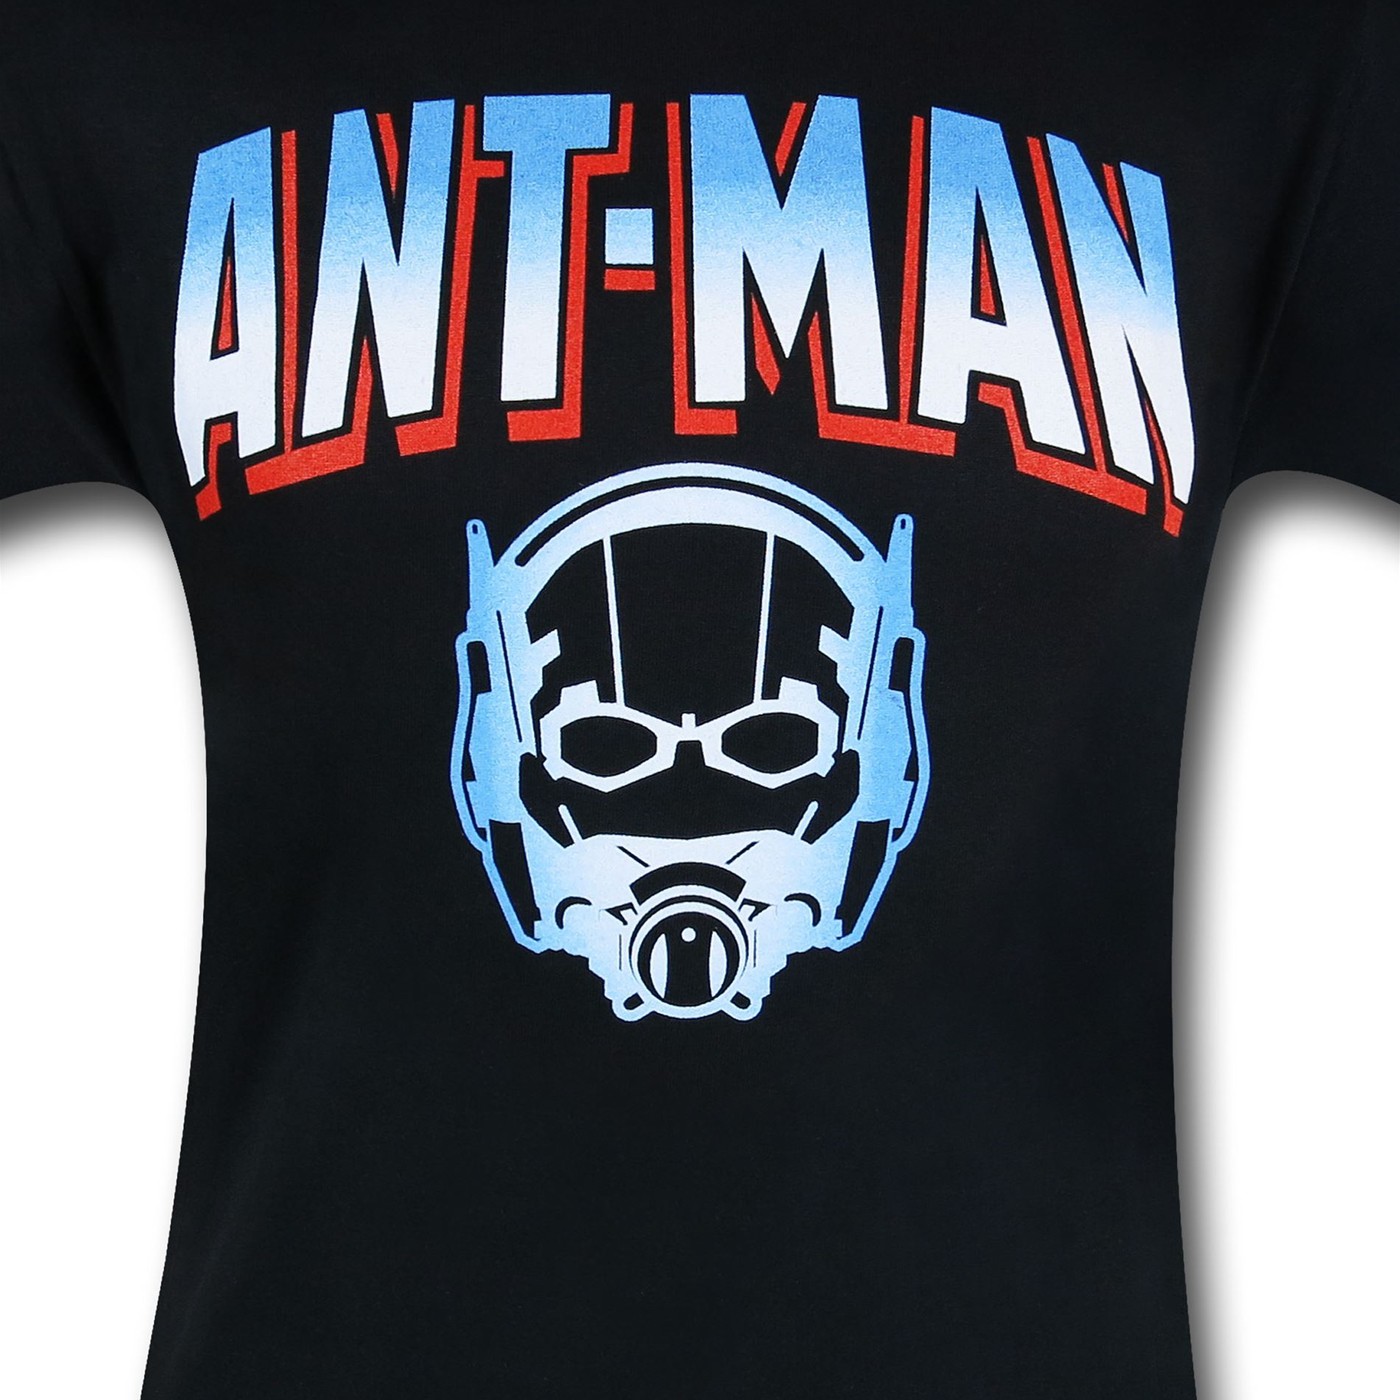 Ant-Man Helm T-Shirt